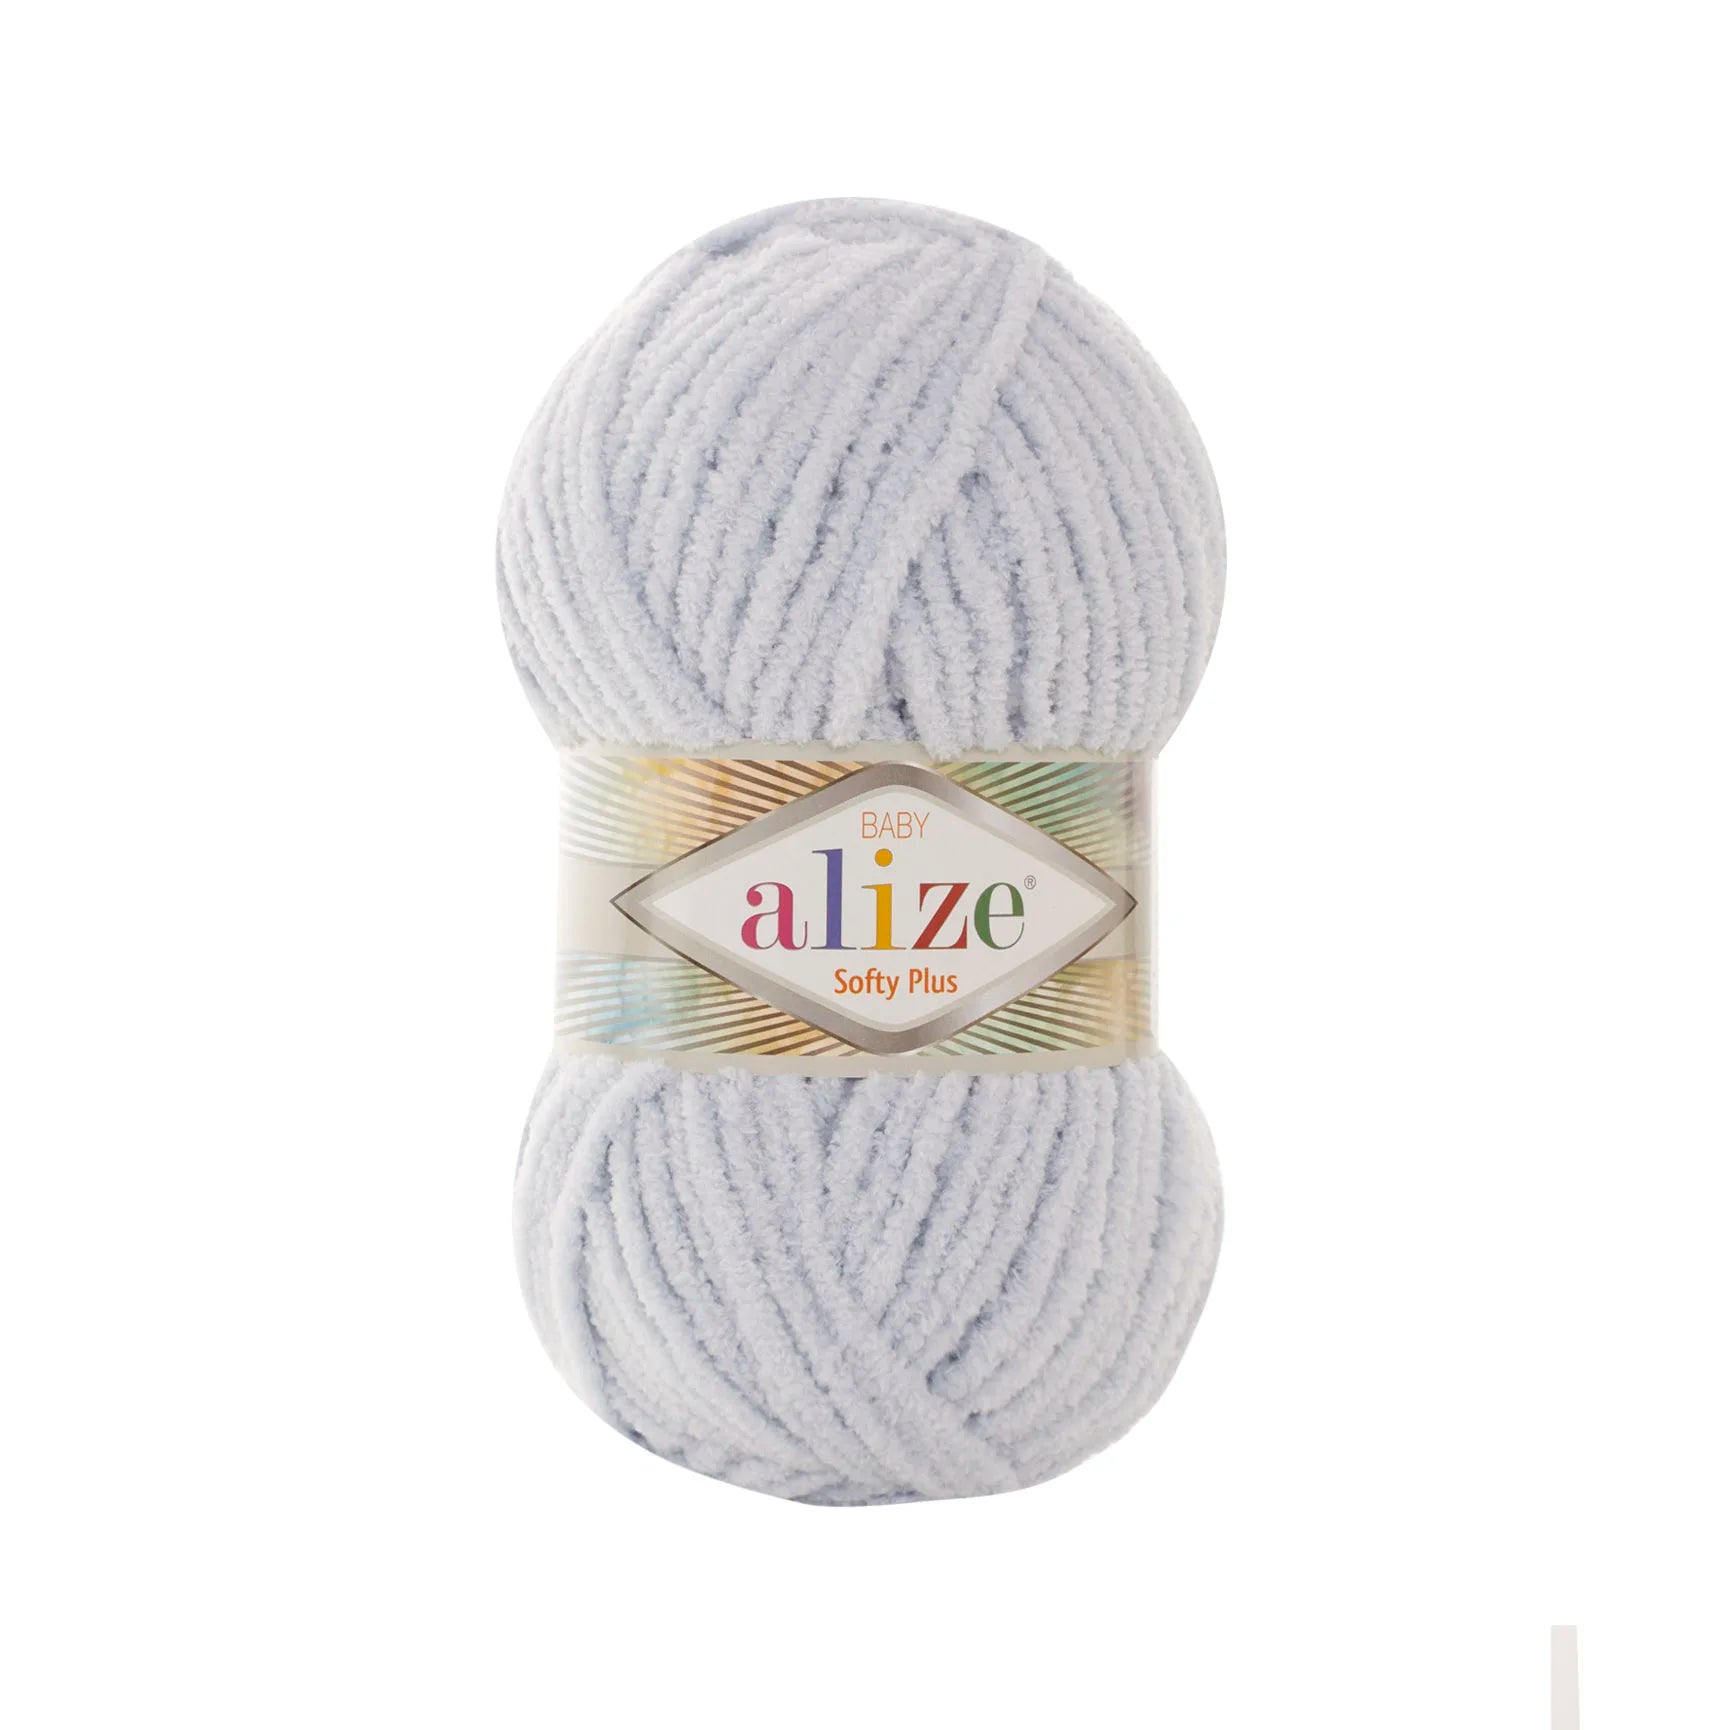 Alize Softy Plus Yarn Hobby Shopy Turkish Store Shop Hand Knitting Yarn 500